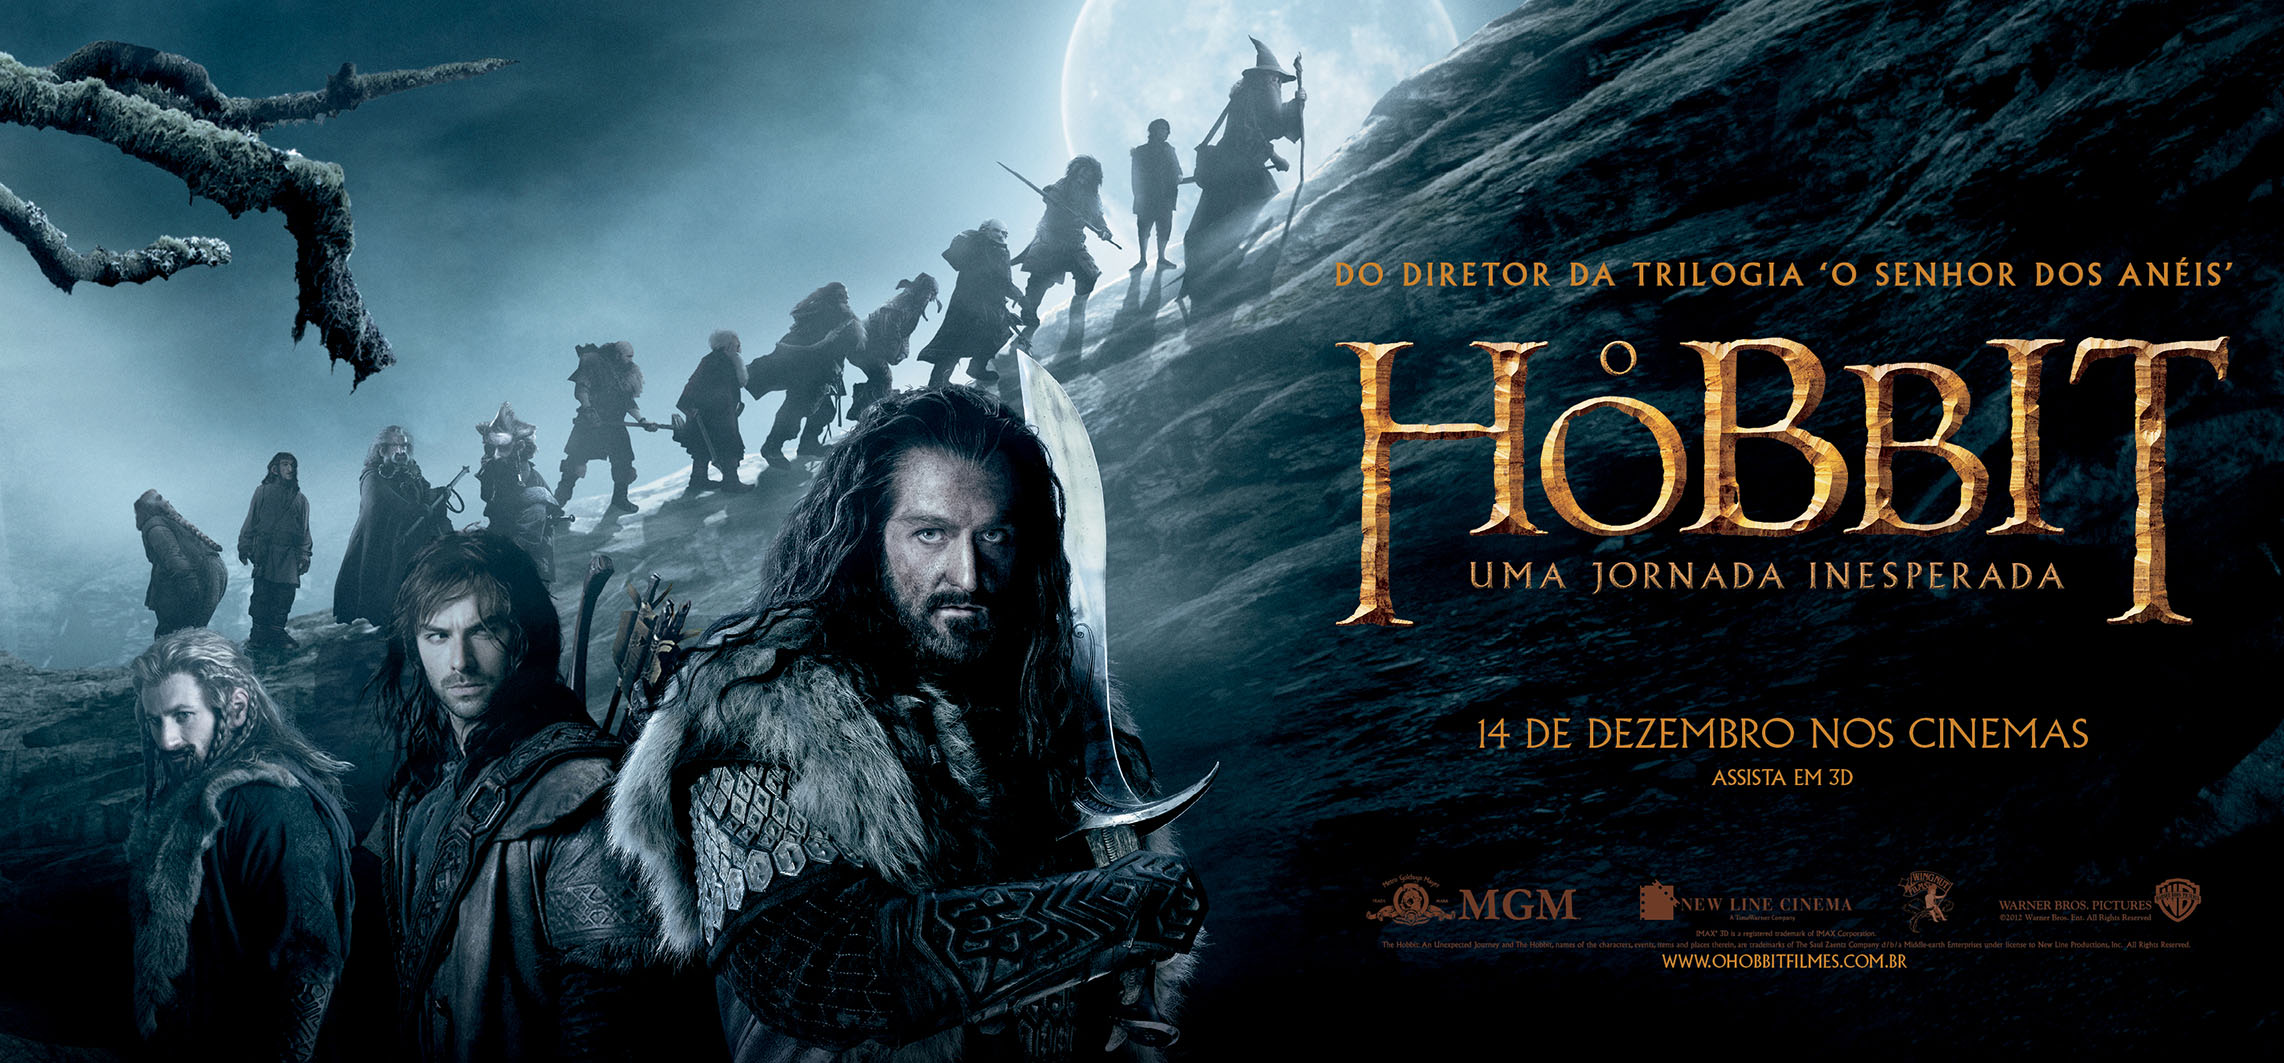 Unexpected journey. Хоббит 2014 Постер. Хоббит 1. The Hobbit: an unexpected Journey. Хоббит баннер.